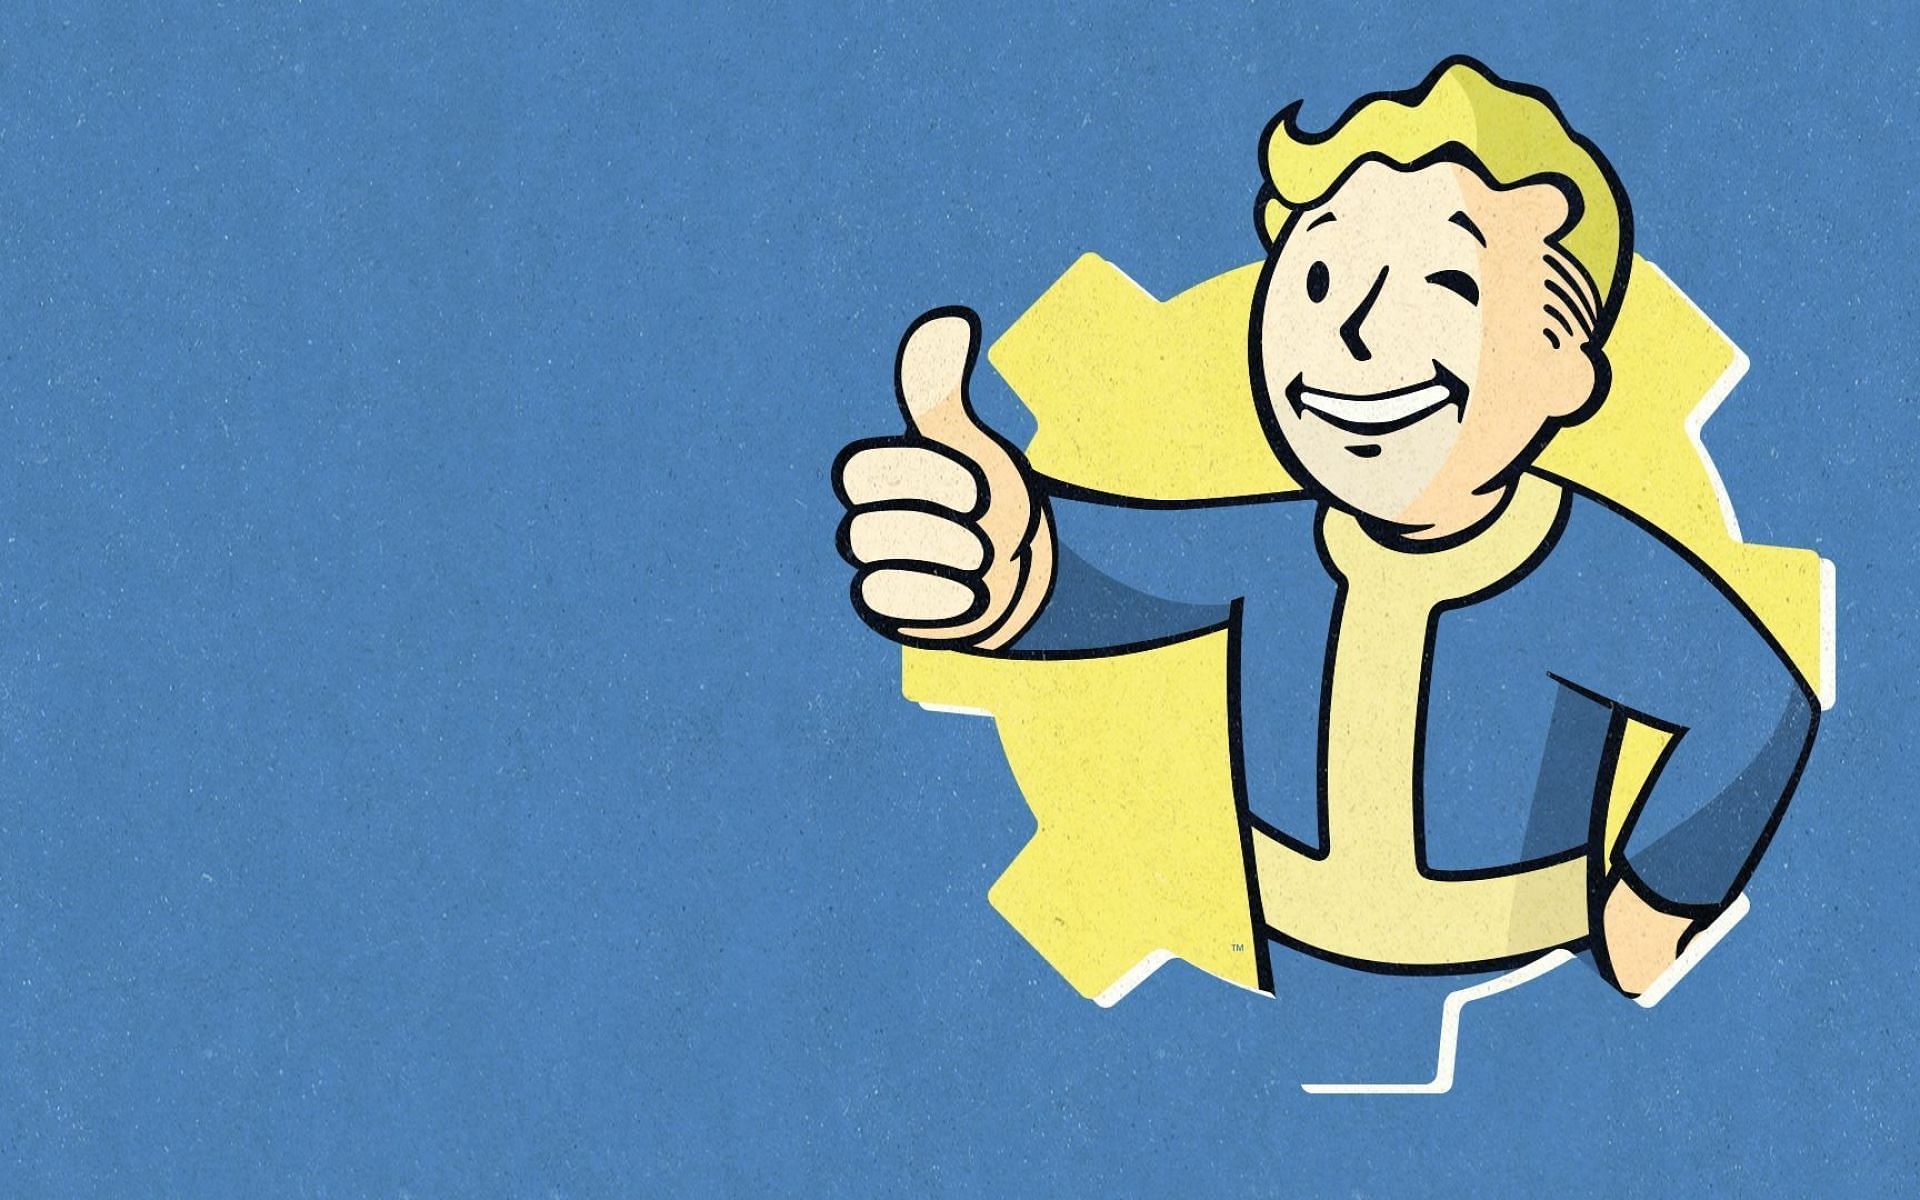 Vault Boy, the mascot of the Fallout media franchise (Image via Bethesda)